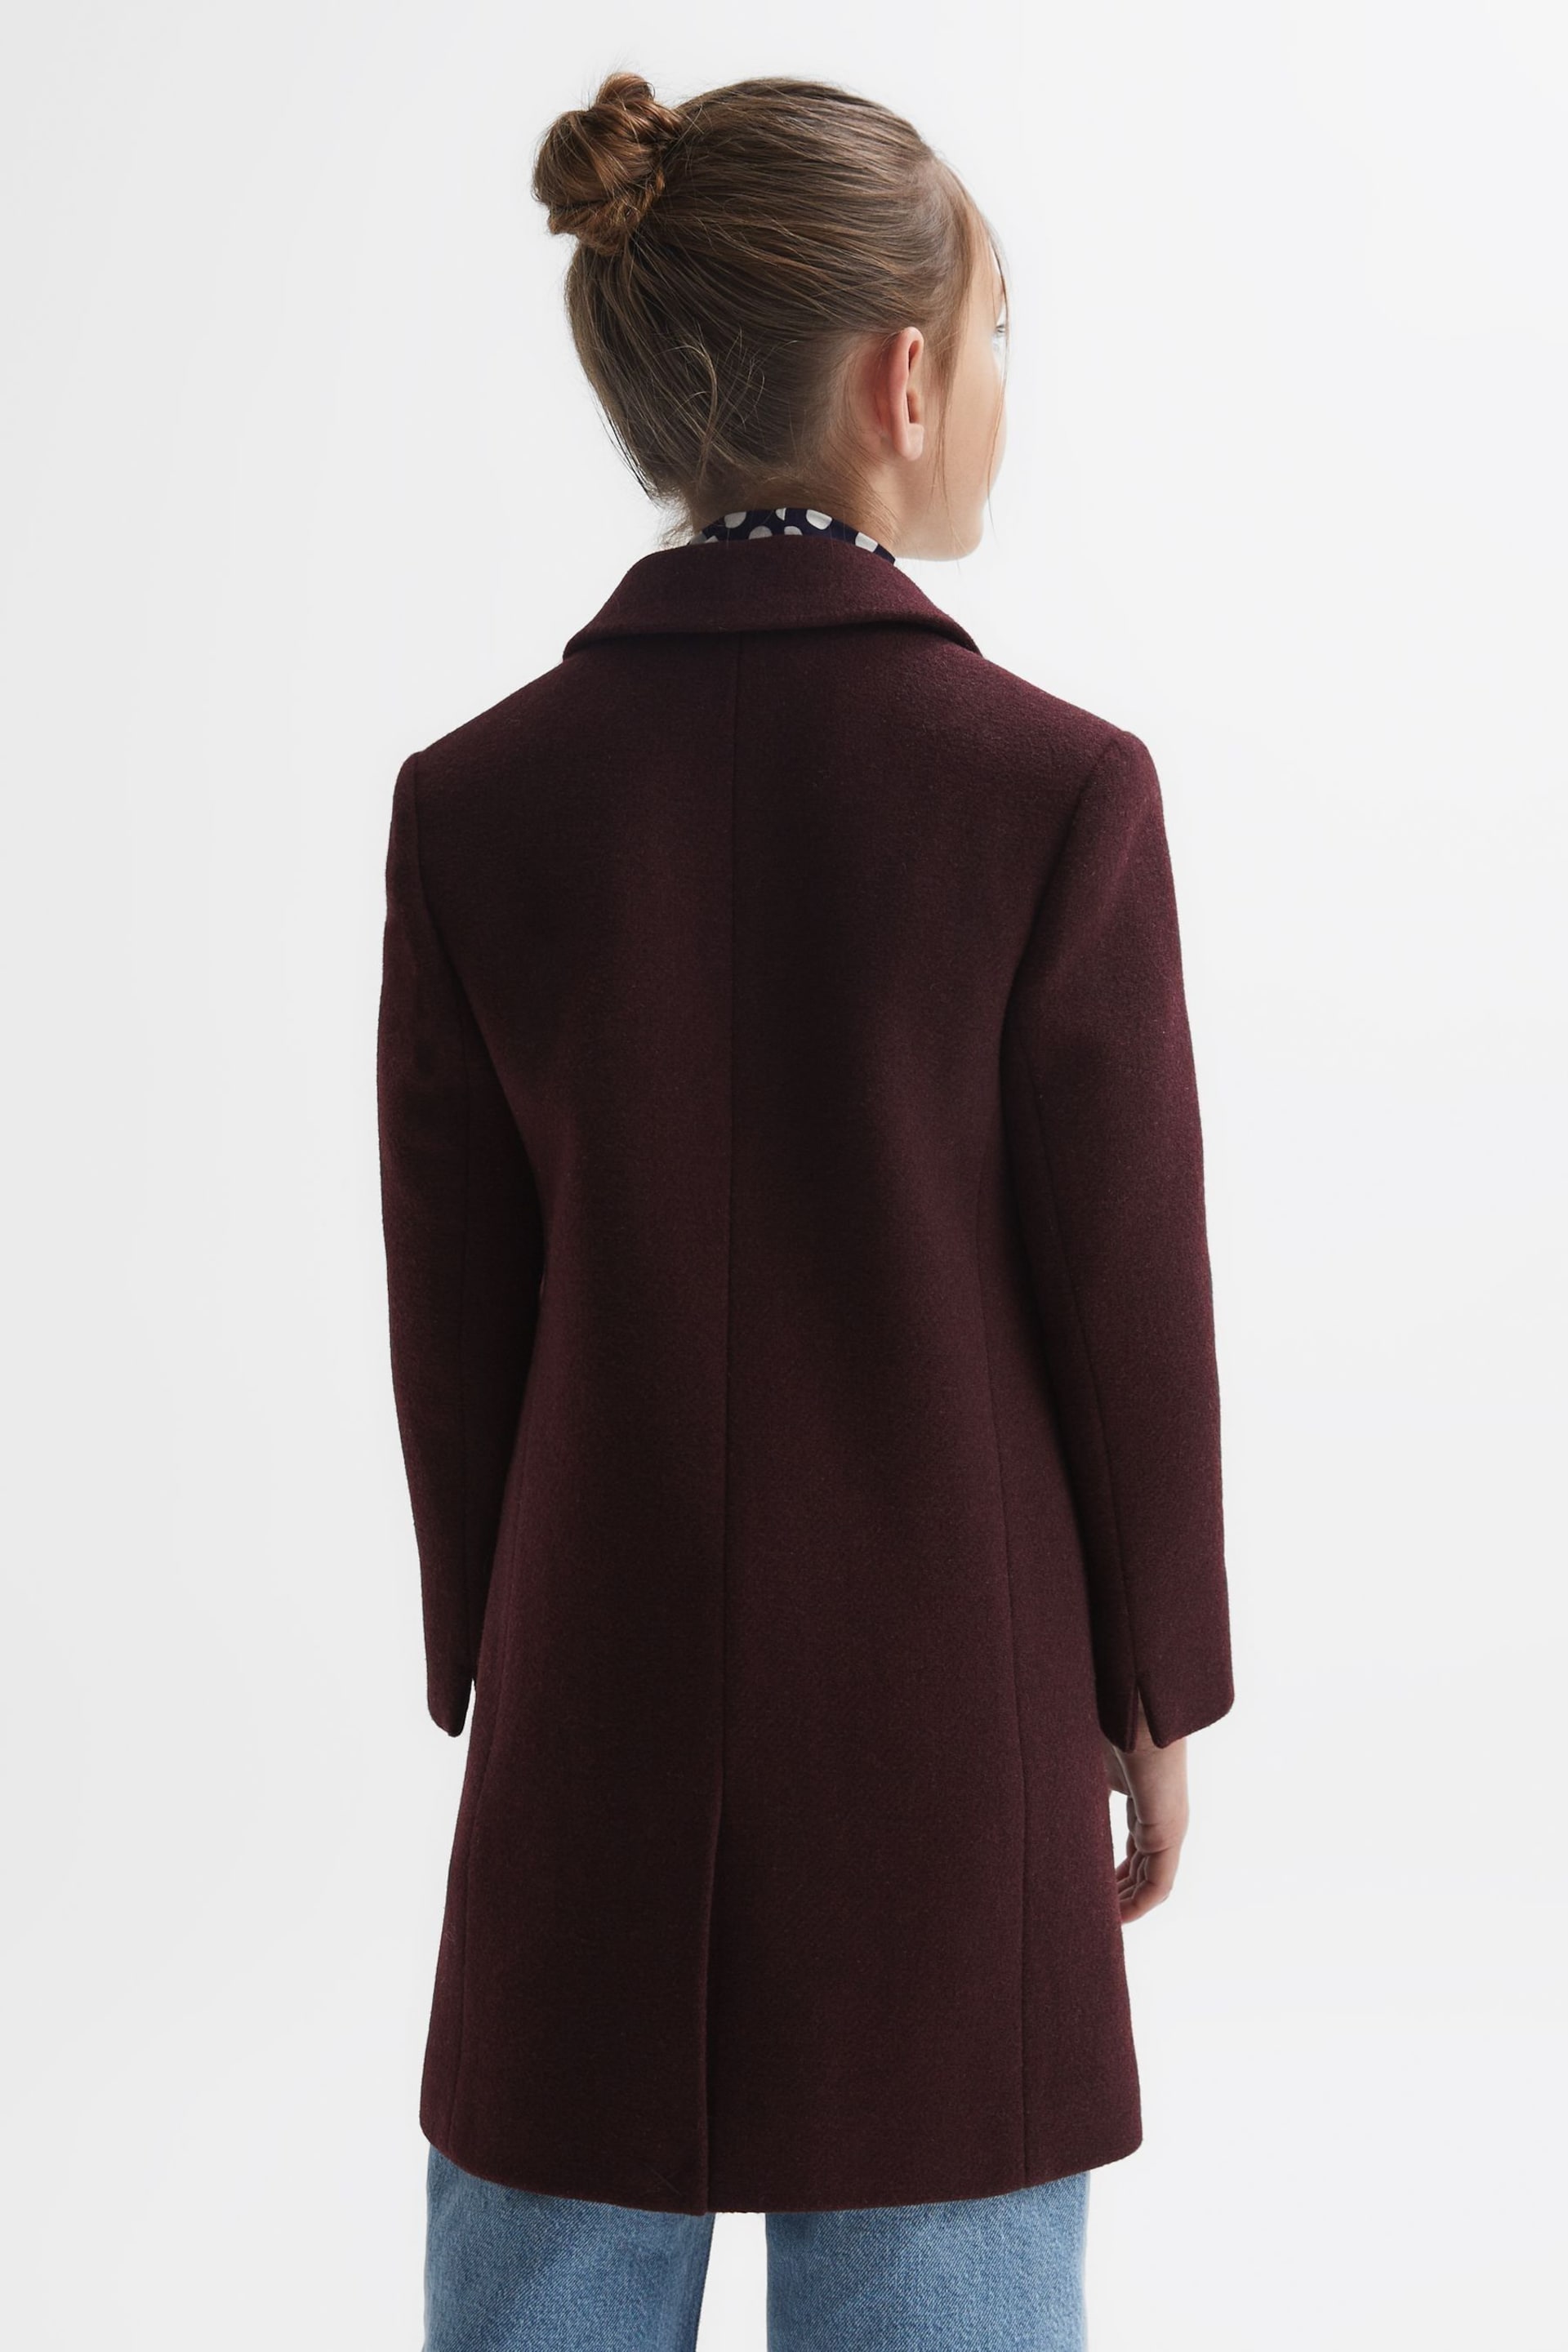 Reiss Berry Harlow Junior Mid Length Wool Blend Coat - Image 5 of 6